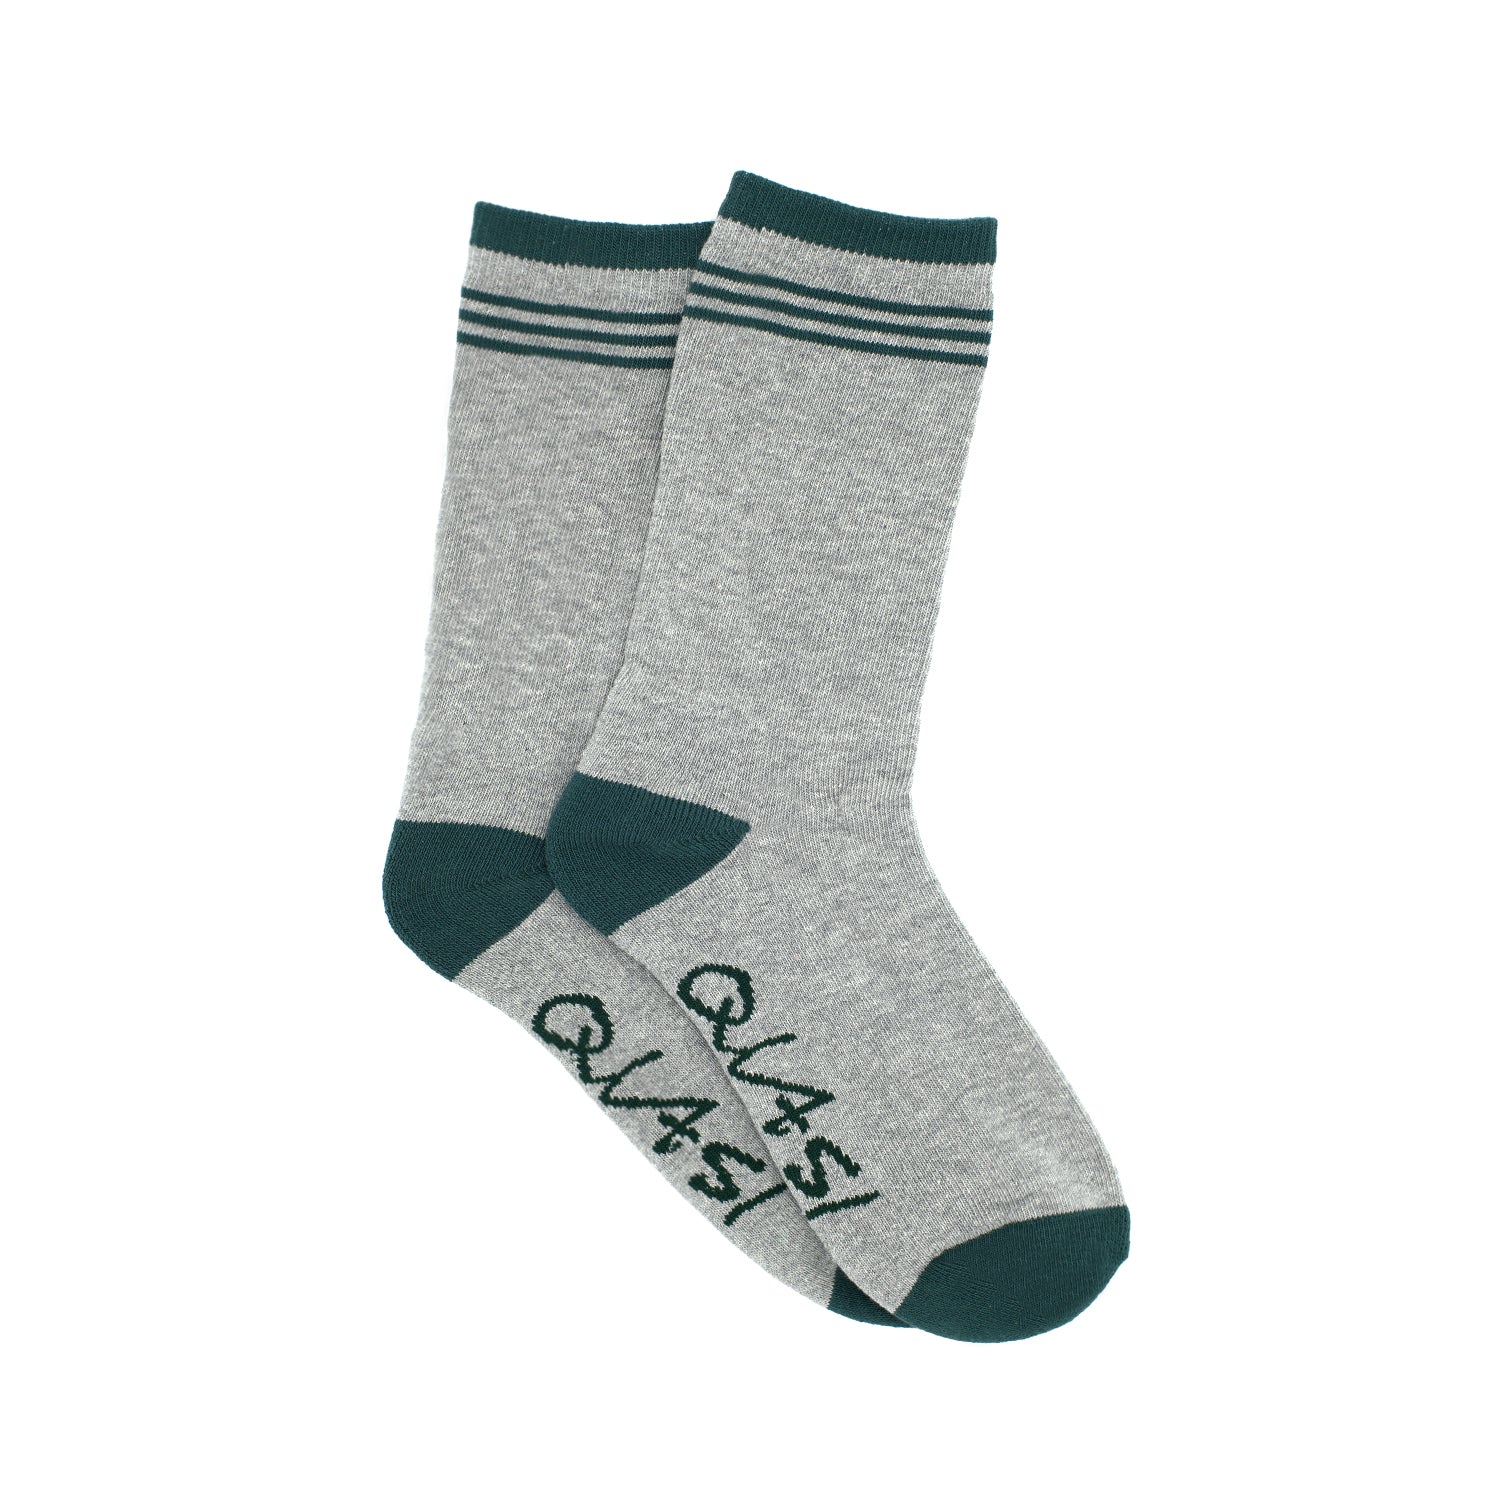 Quasi Note Socks Grey / Forest